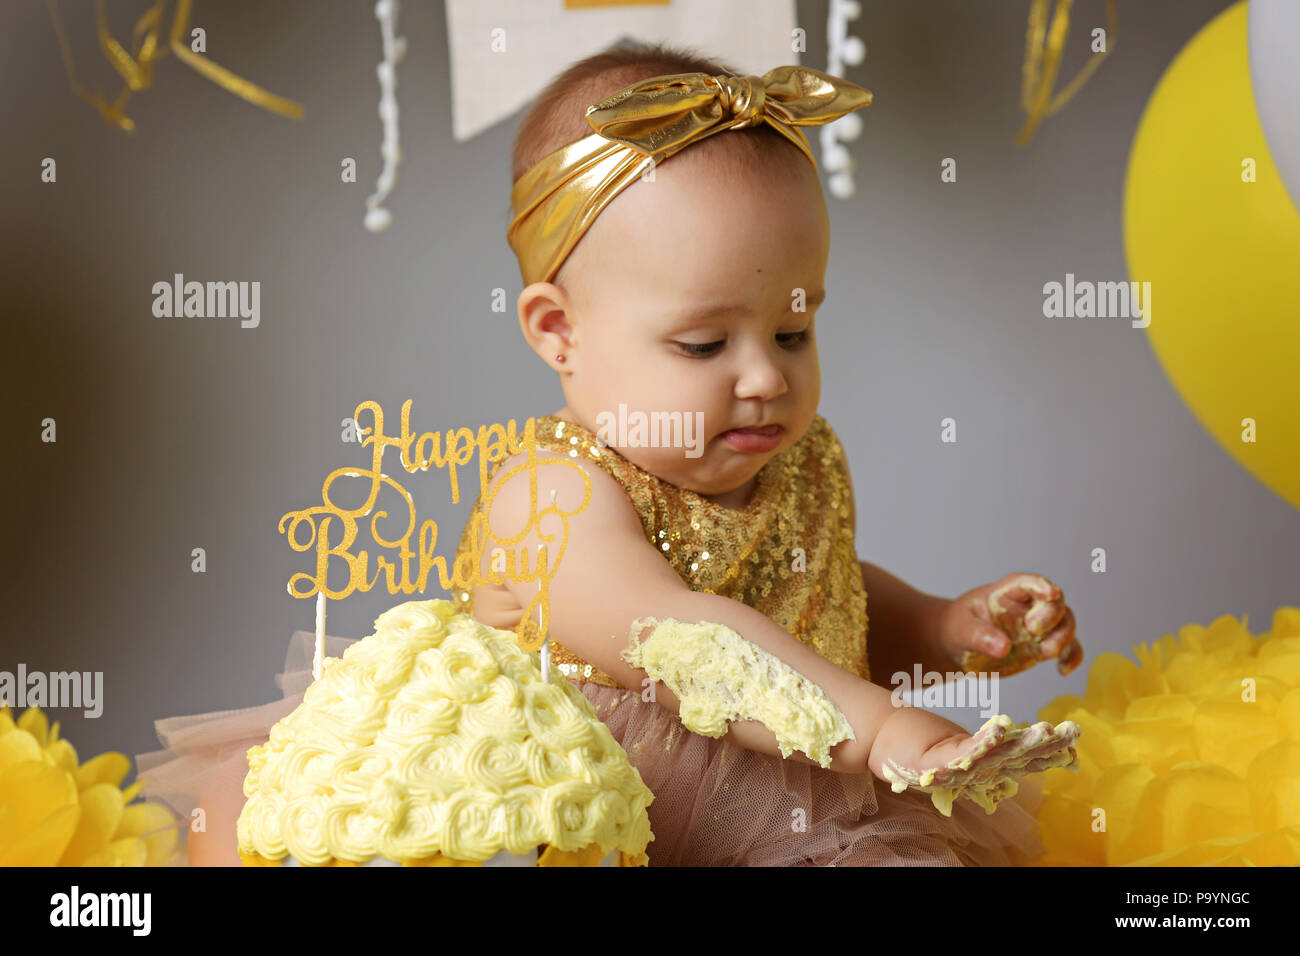 Smiling baby girl celebrating her first birthday Stock Photo